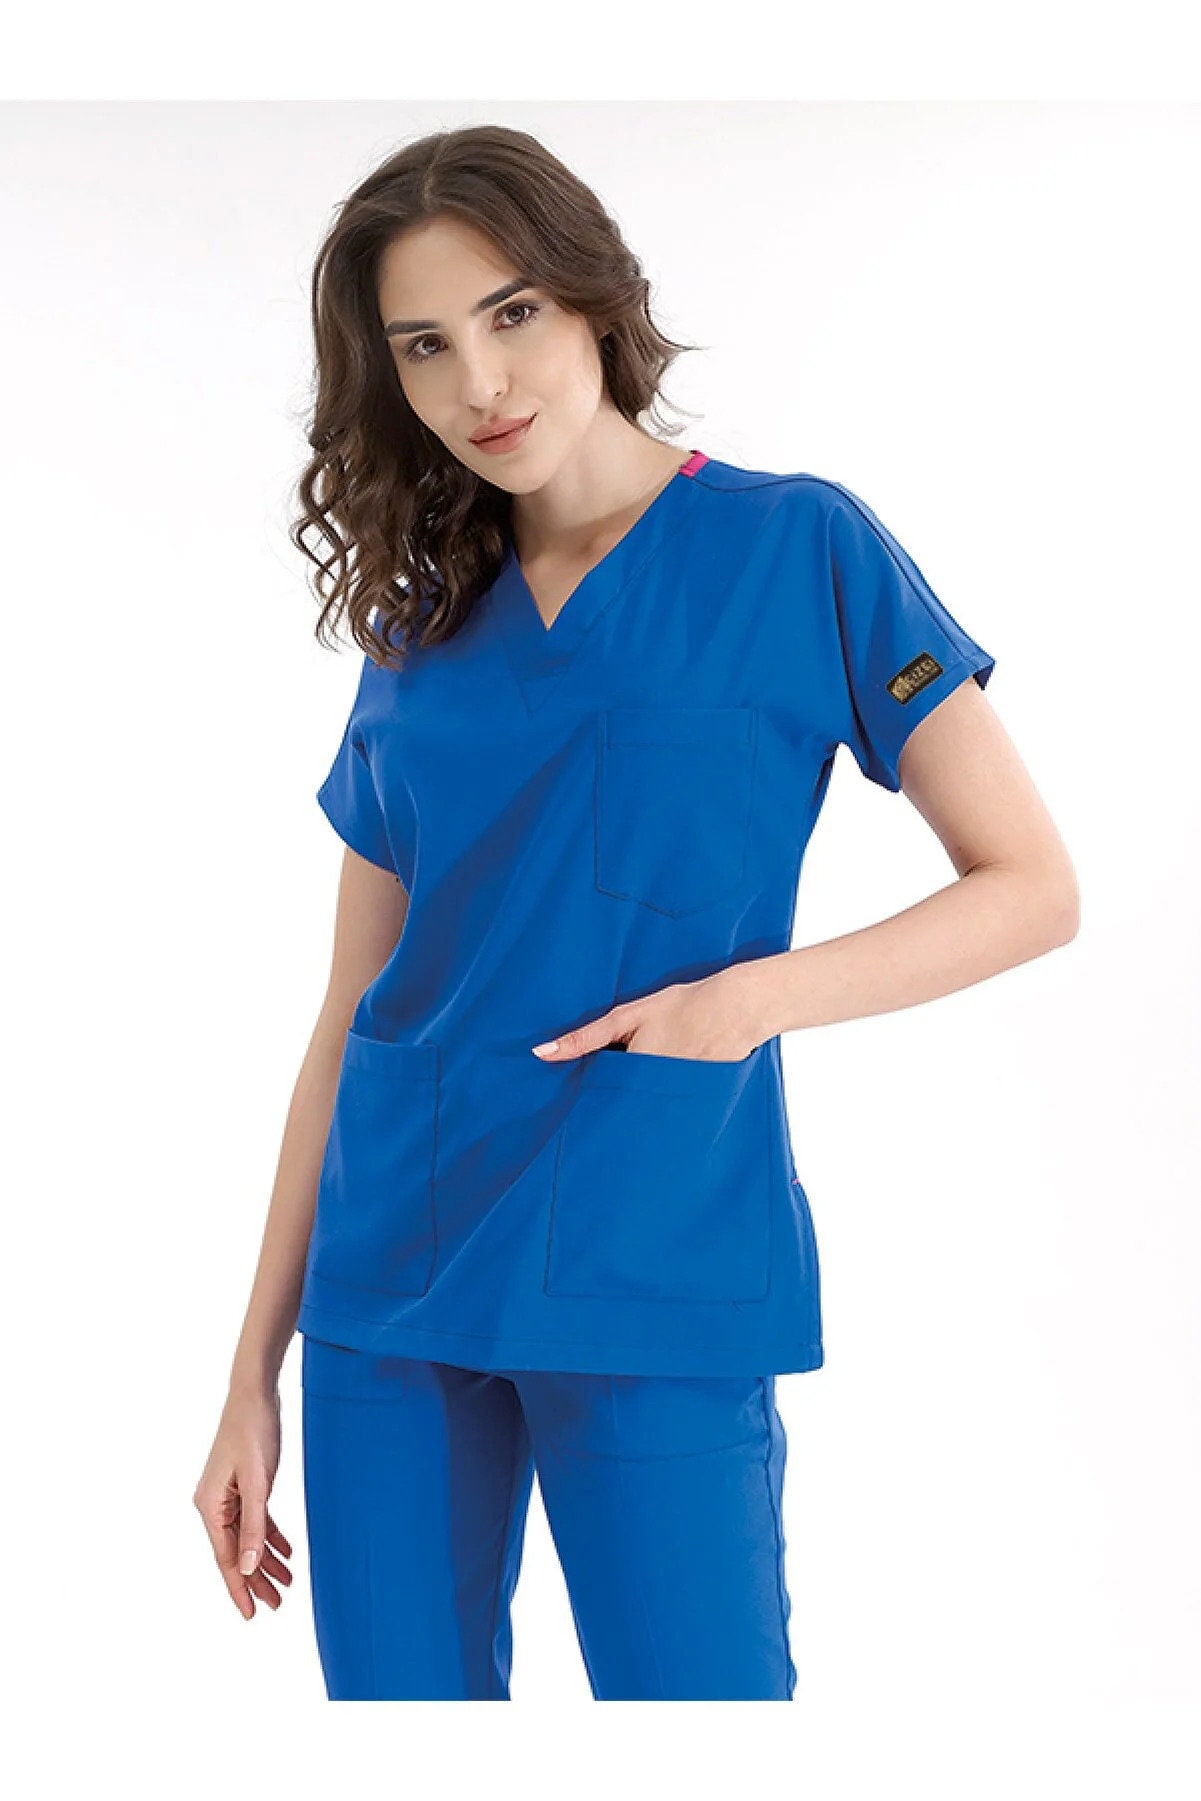 Premium Quality Blue Nurse Uniforms: Elevate Your Professional ...